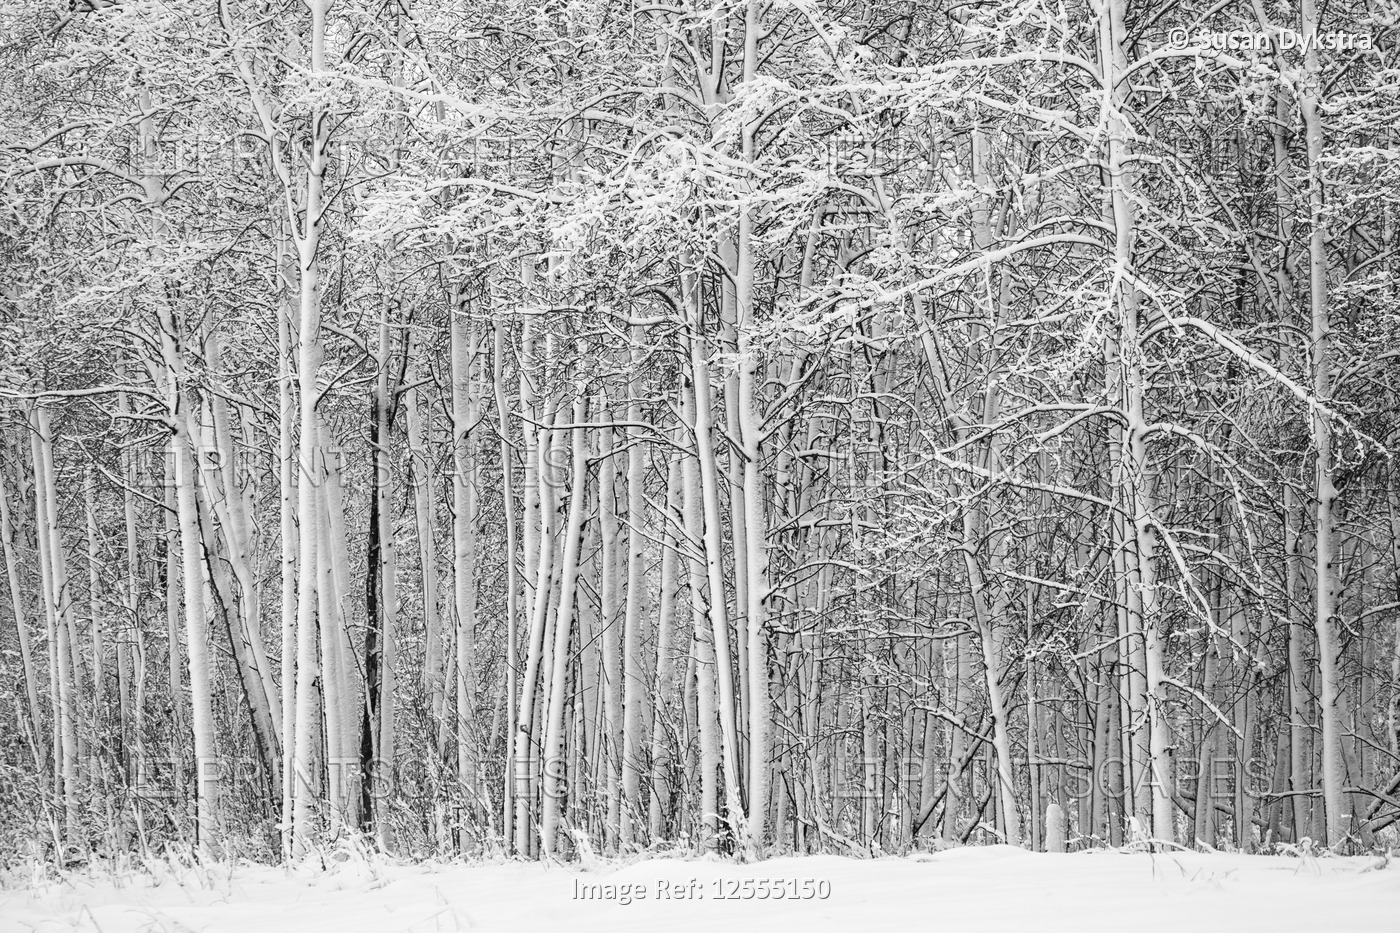 Winter wonder land in the forest